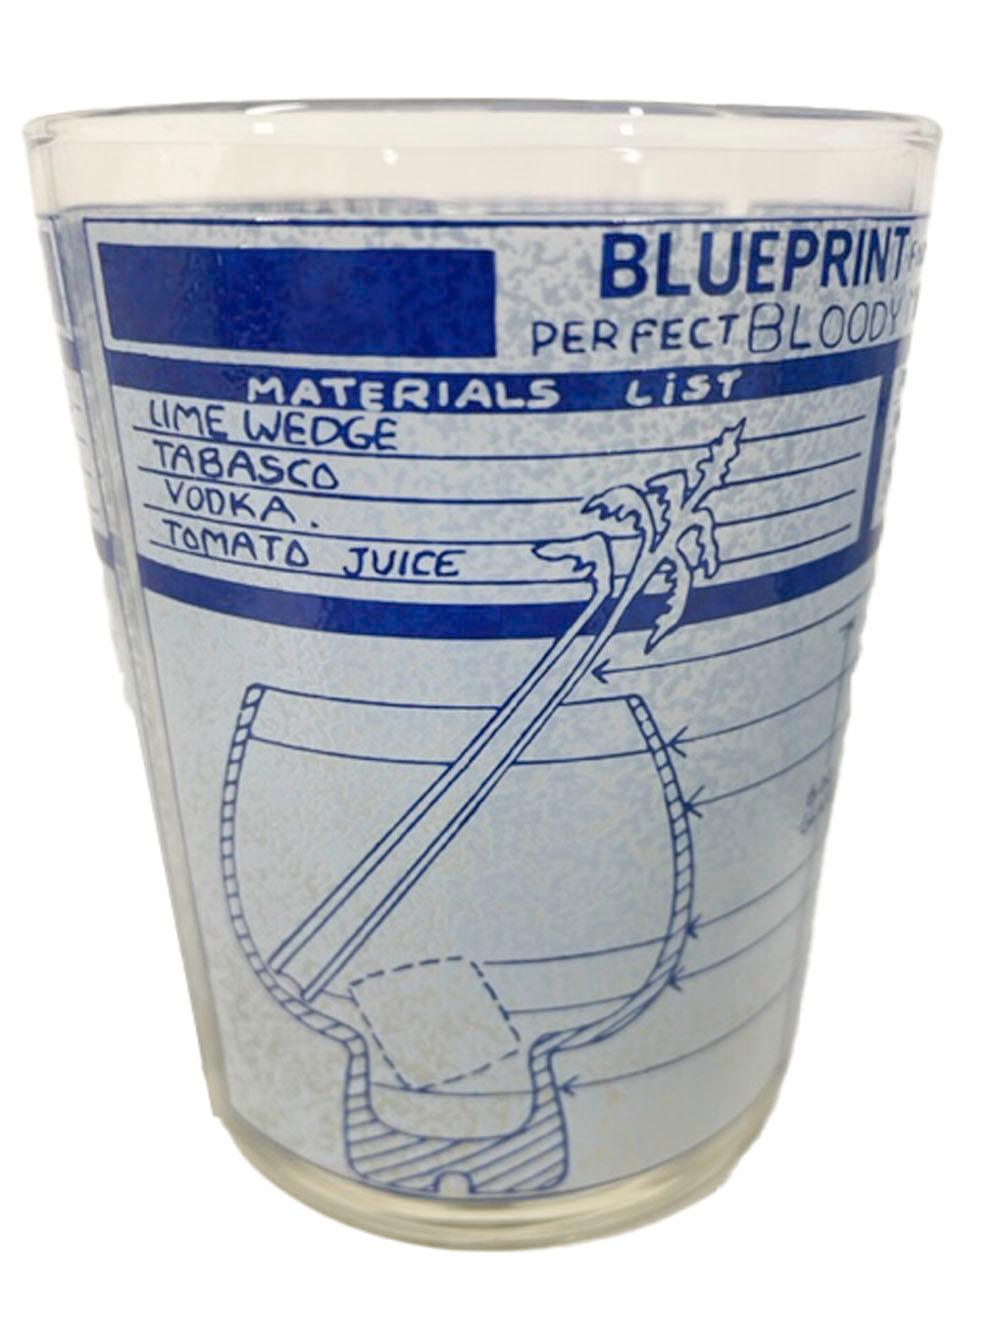 Vintage-Rocks-Gläser von Cera, „Blueprints for Perfect Cocktails“ (Moderne der Mitte des Jahrhunderts)